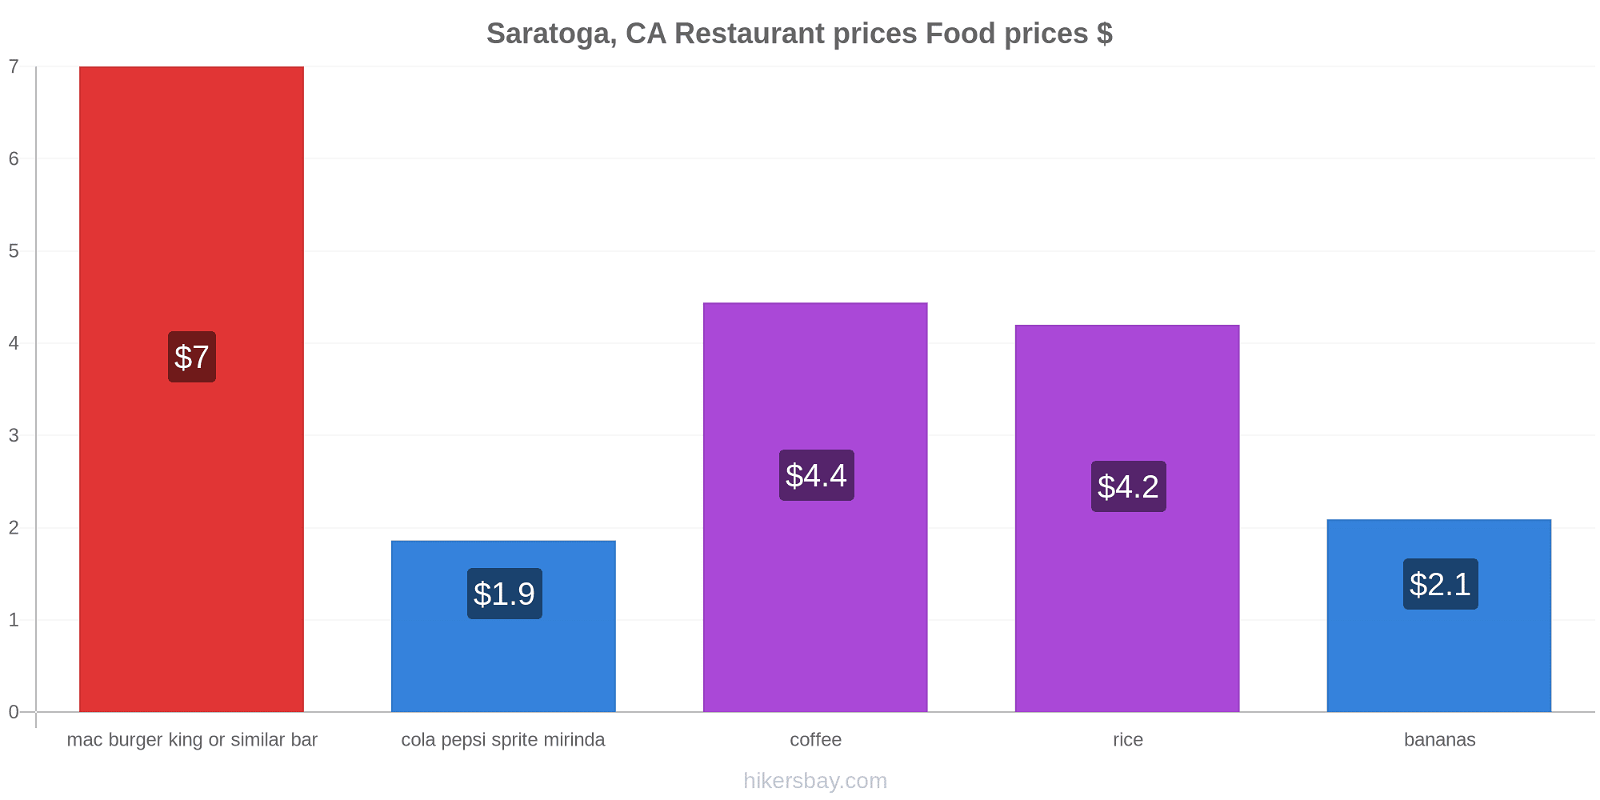 Saratoga, CA price changes hikersbay.com